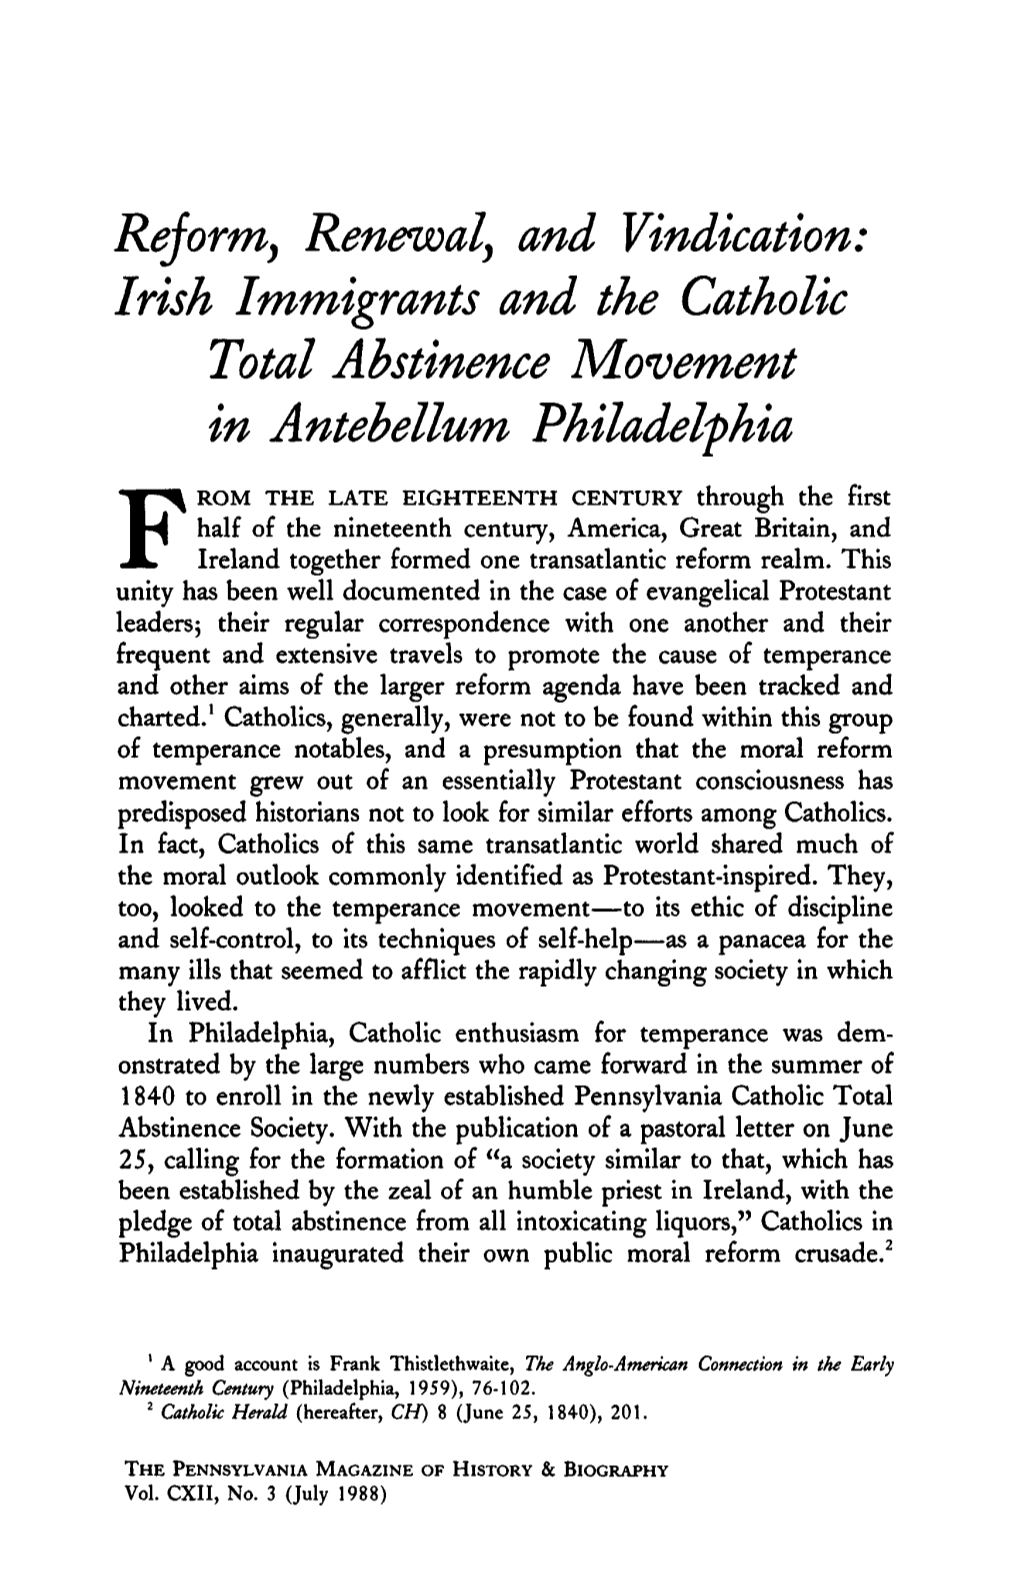 Irish Immigrants and the Catholic Total Abstinence Movement in Antebellum Philadelphia